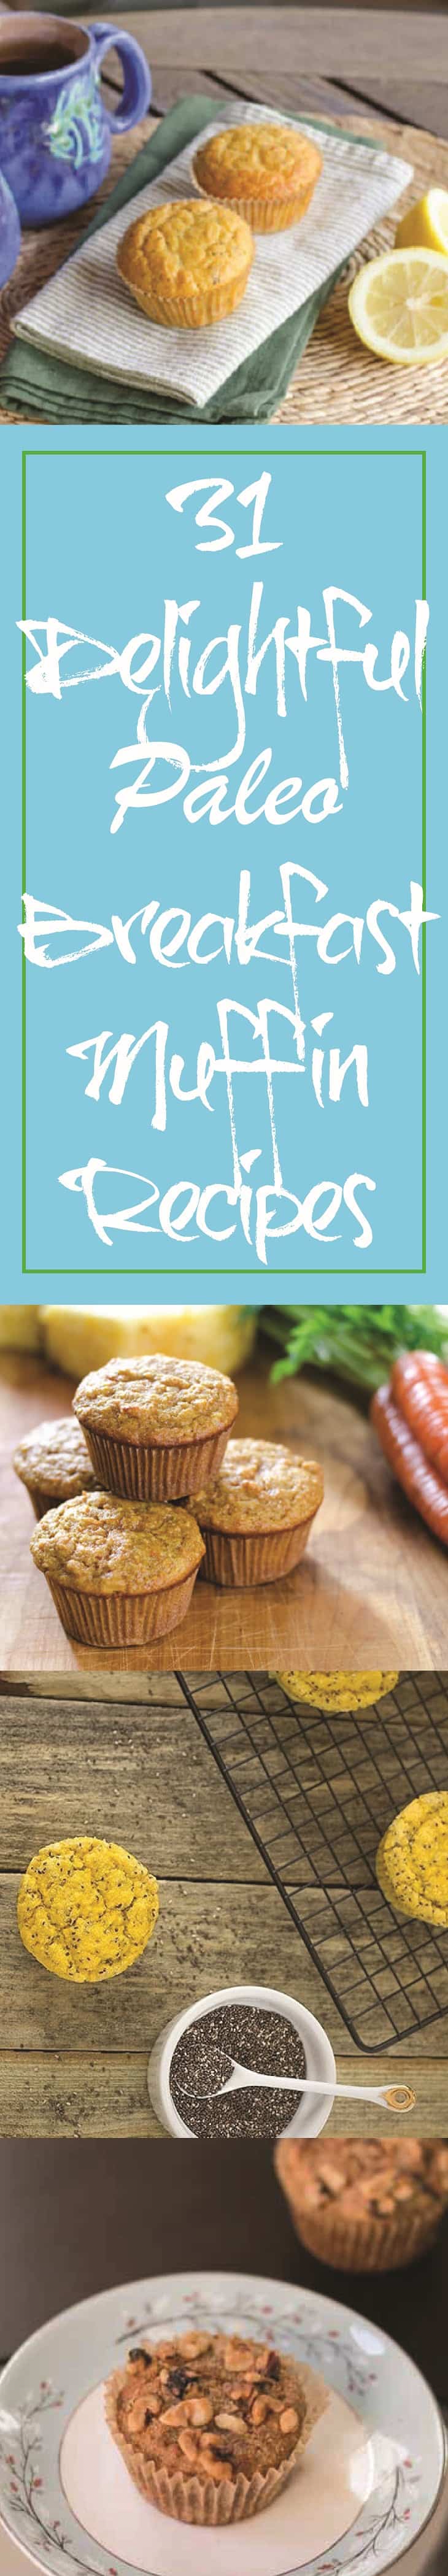 Paleo Breakfast Muffin Recipes  #Paleo #Breakfast #Muffin #recipes https://paleoflourish.com/paleo-breakfast-muffin-recipes